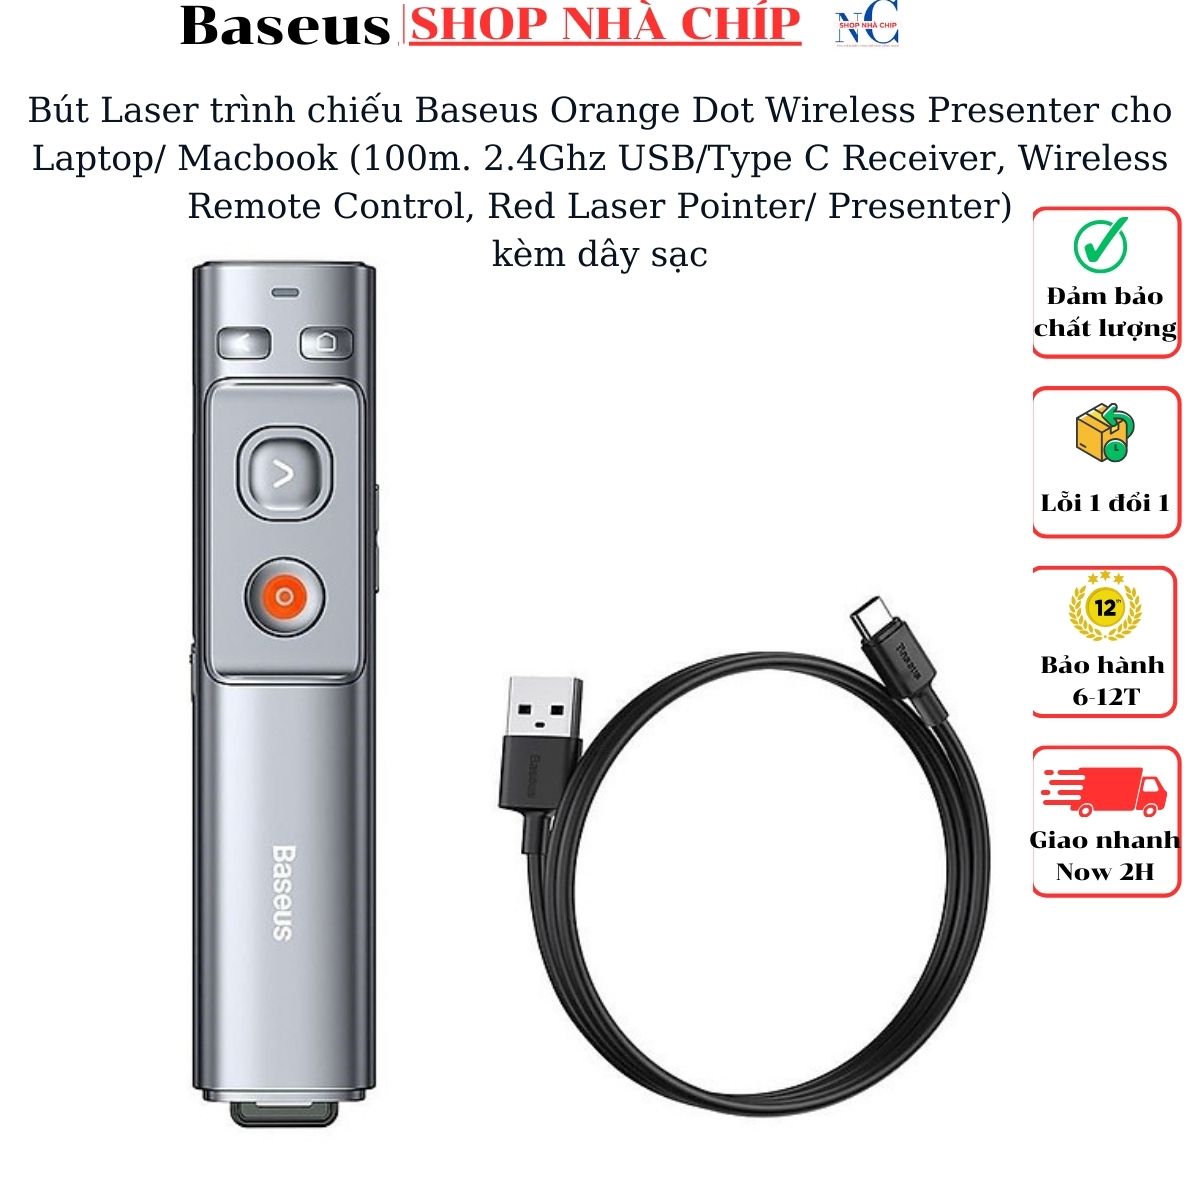 Bút Laser trình chiếu Baseus Orange Dot Wireless Presenter cho Laptop/ Macbook (100m. 2.4Ghz USB/Type C Receiver, Wireless Remote Control, Red Laser Pointer/ Presenter) kèm dây sạc- Hàng chính hãng